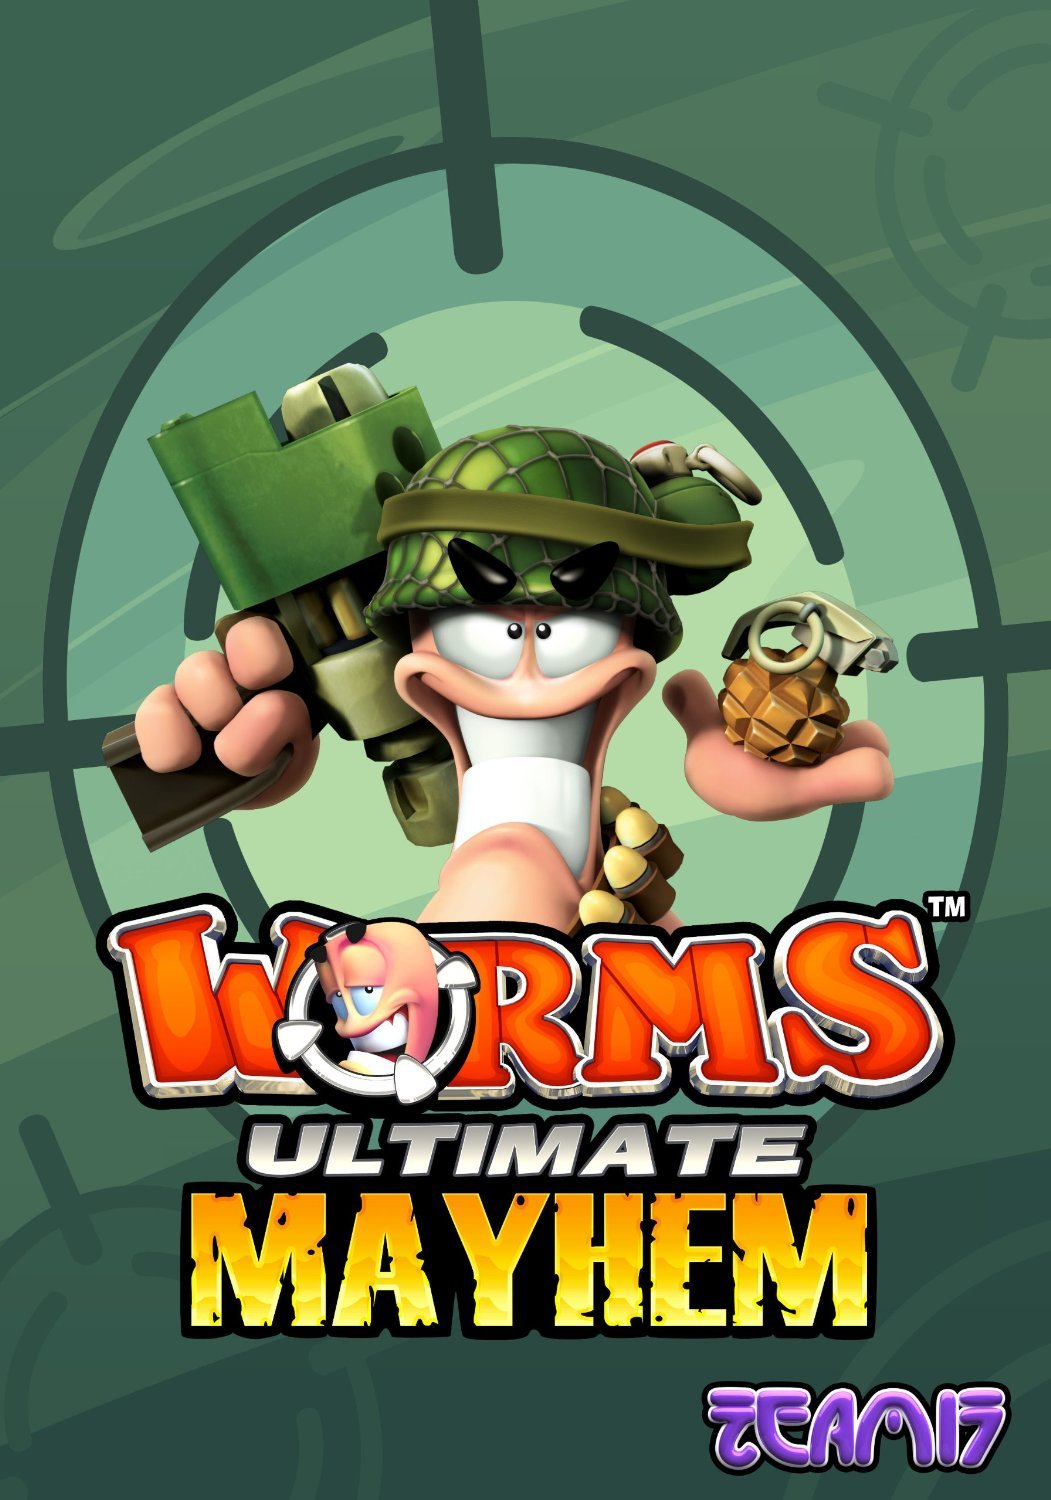 worms 4 mayhem serial crack key